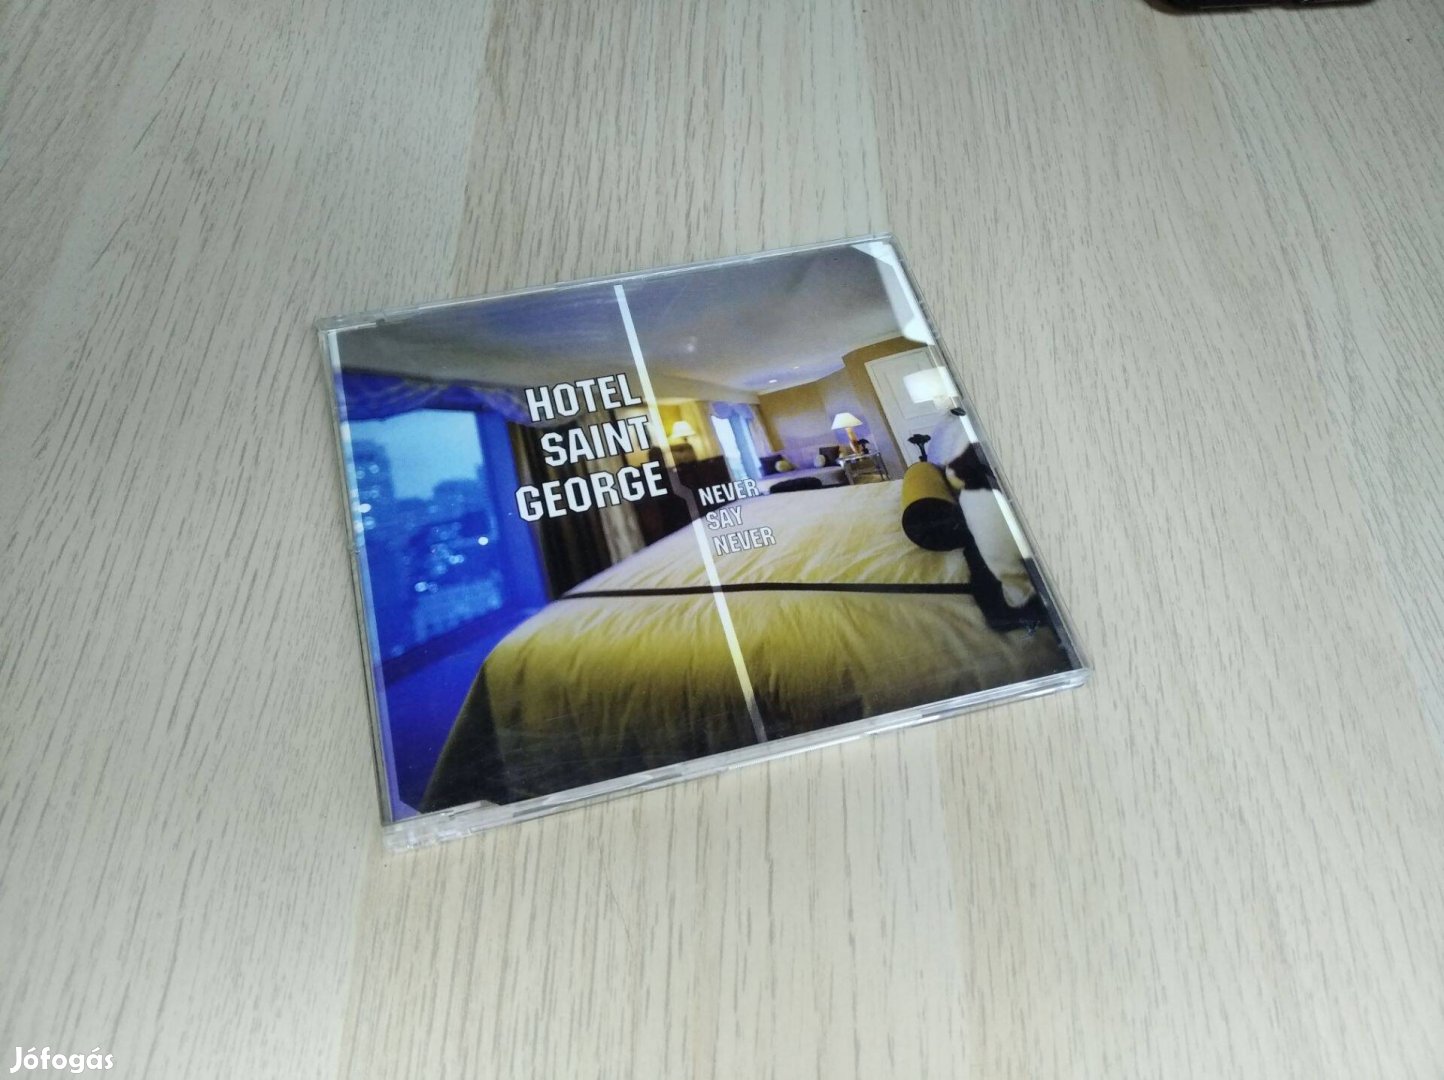 Hotel Saint George - Never Say Never / Maxi CD (Italy 2002.)